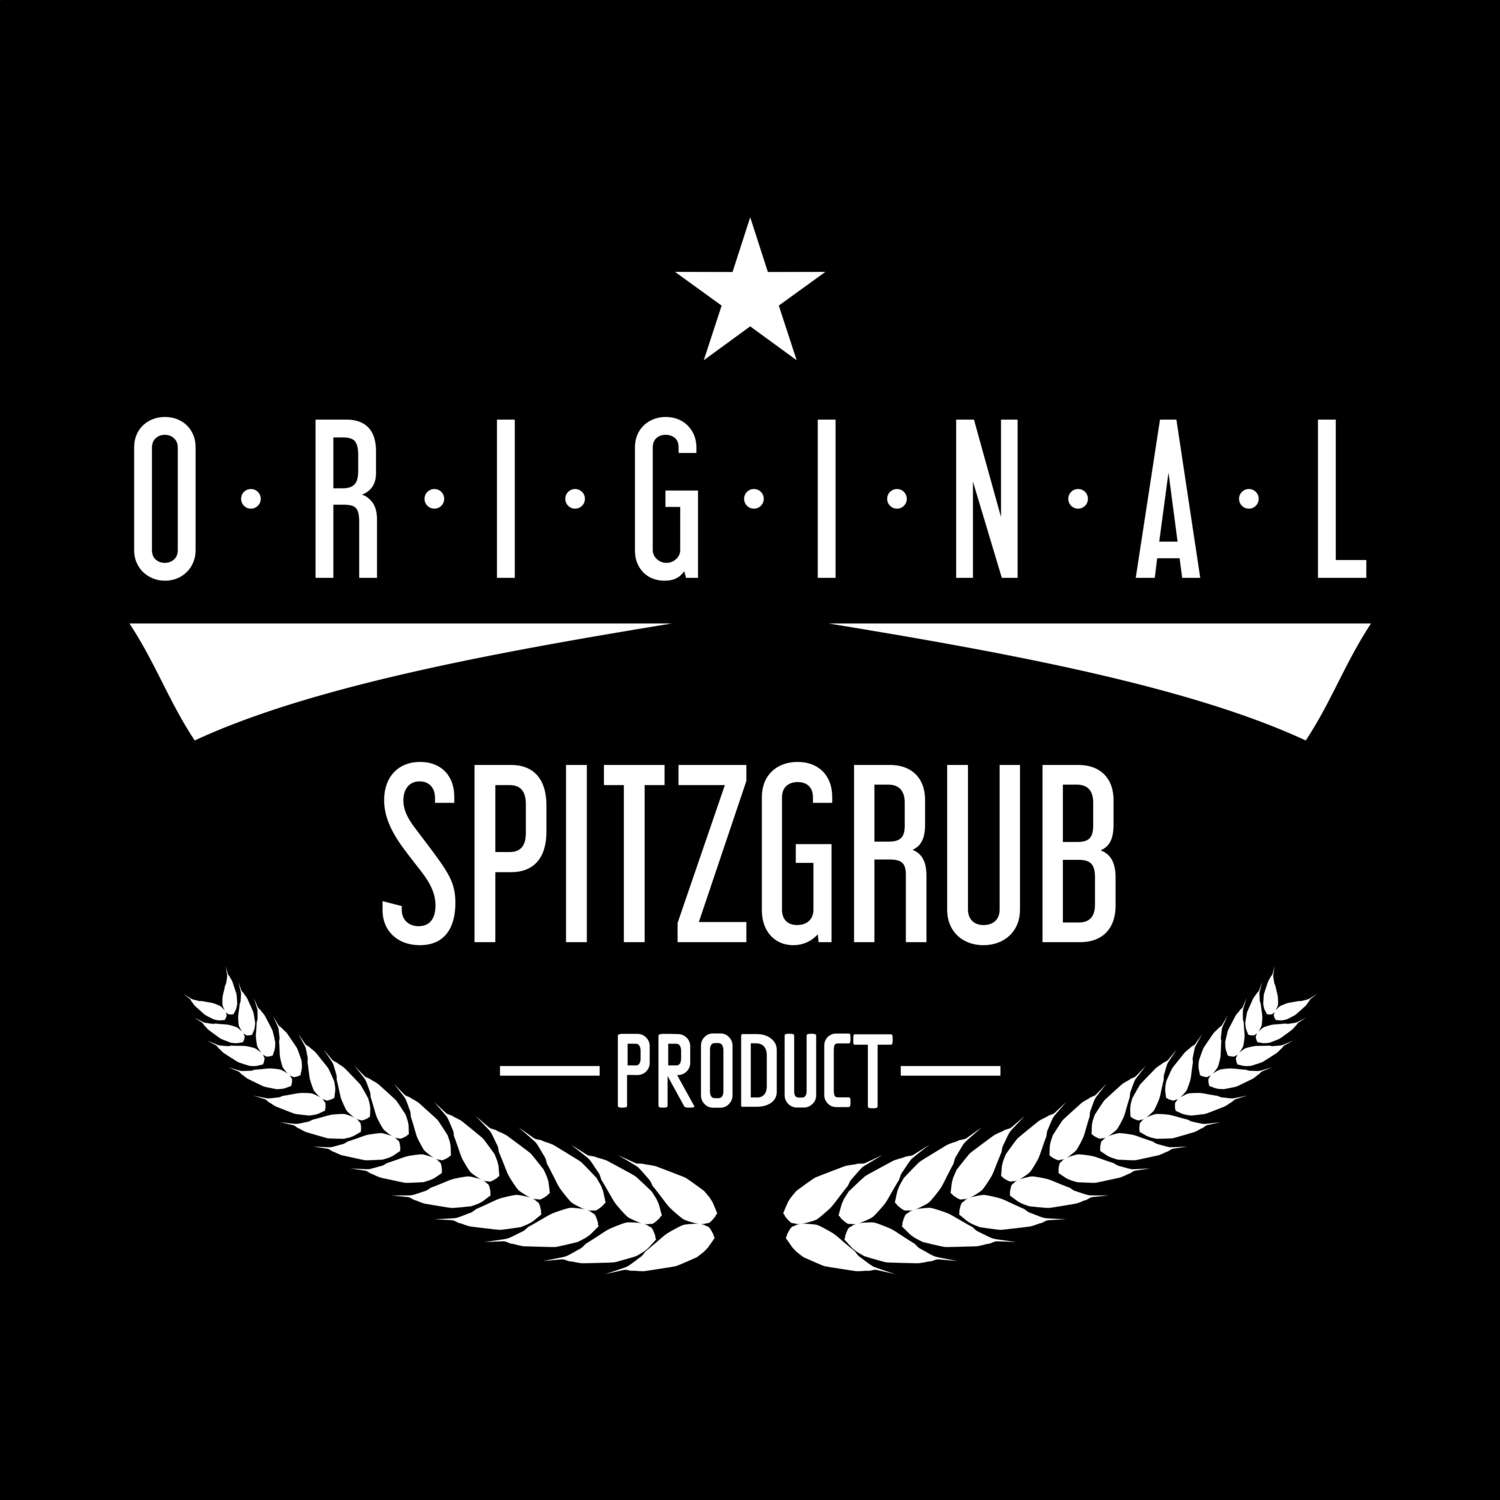 Spitzgrub T-Shirt »Original Product«